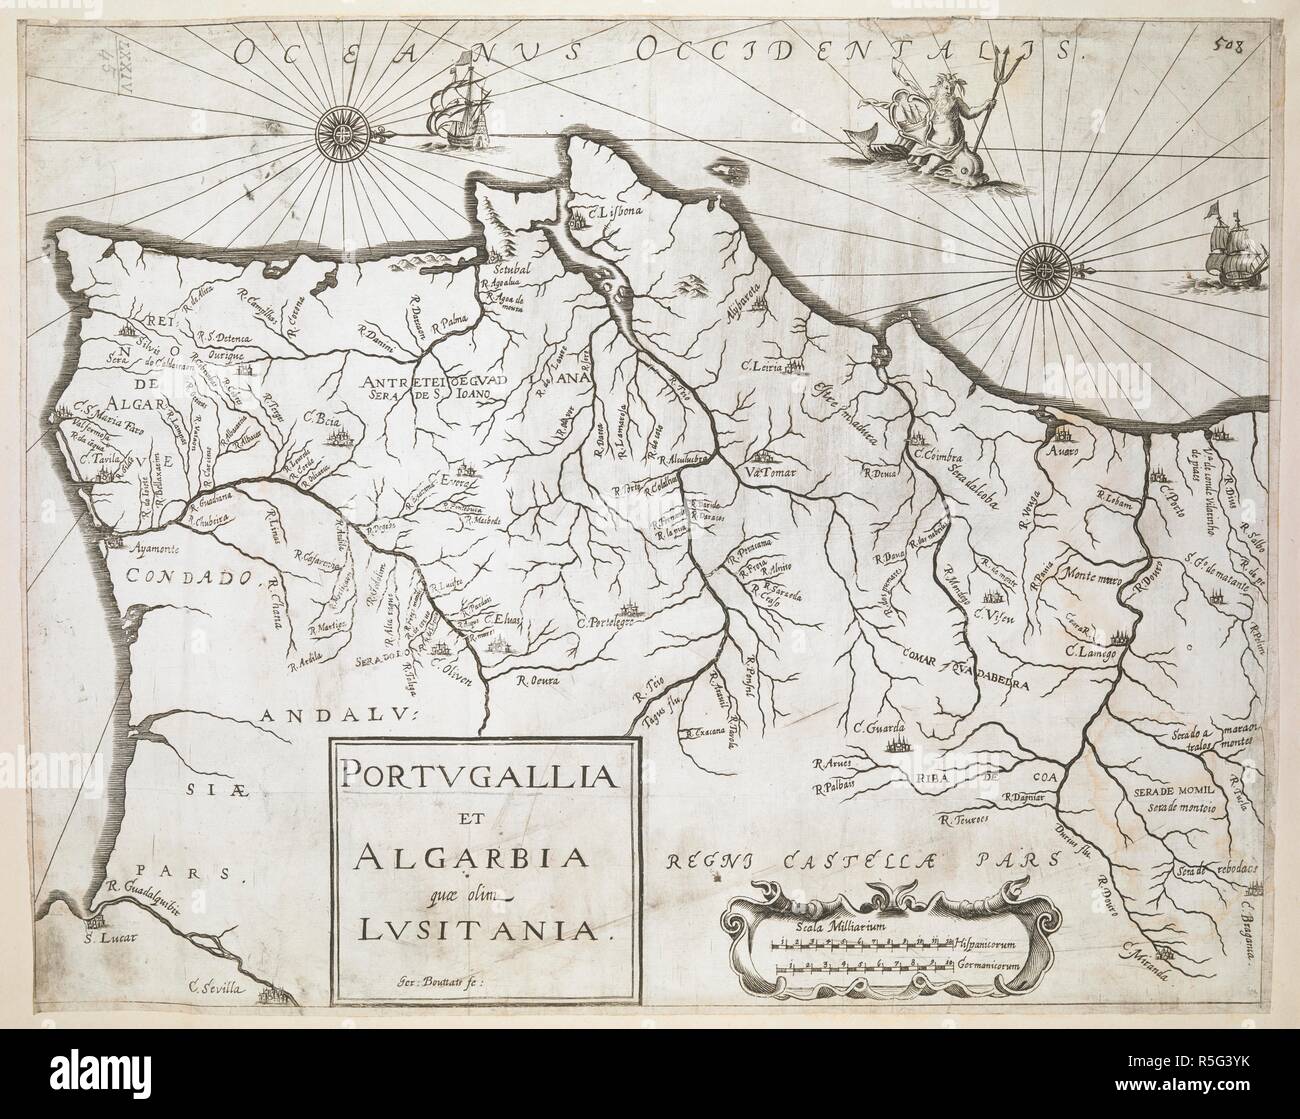 A map of Portugal and the Algarve. Portugallia et Algarbia, quae olim Lusitania. Source: Maps K.Top.74.45. Stock Photo